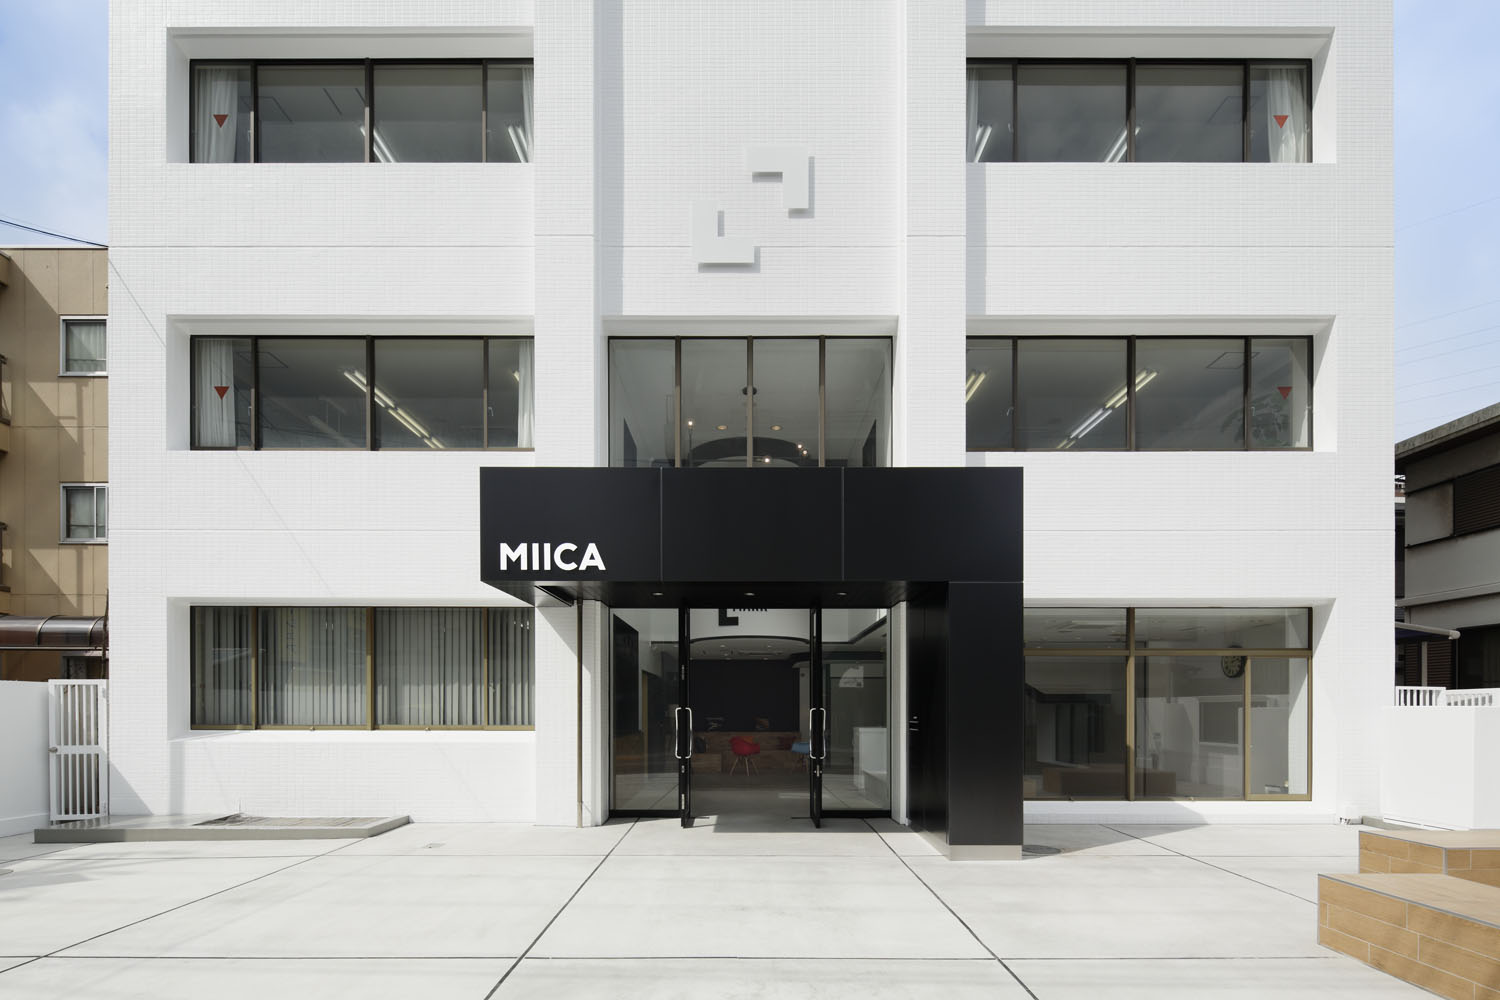 MIICA-東京表現高等学院 (1)